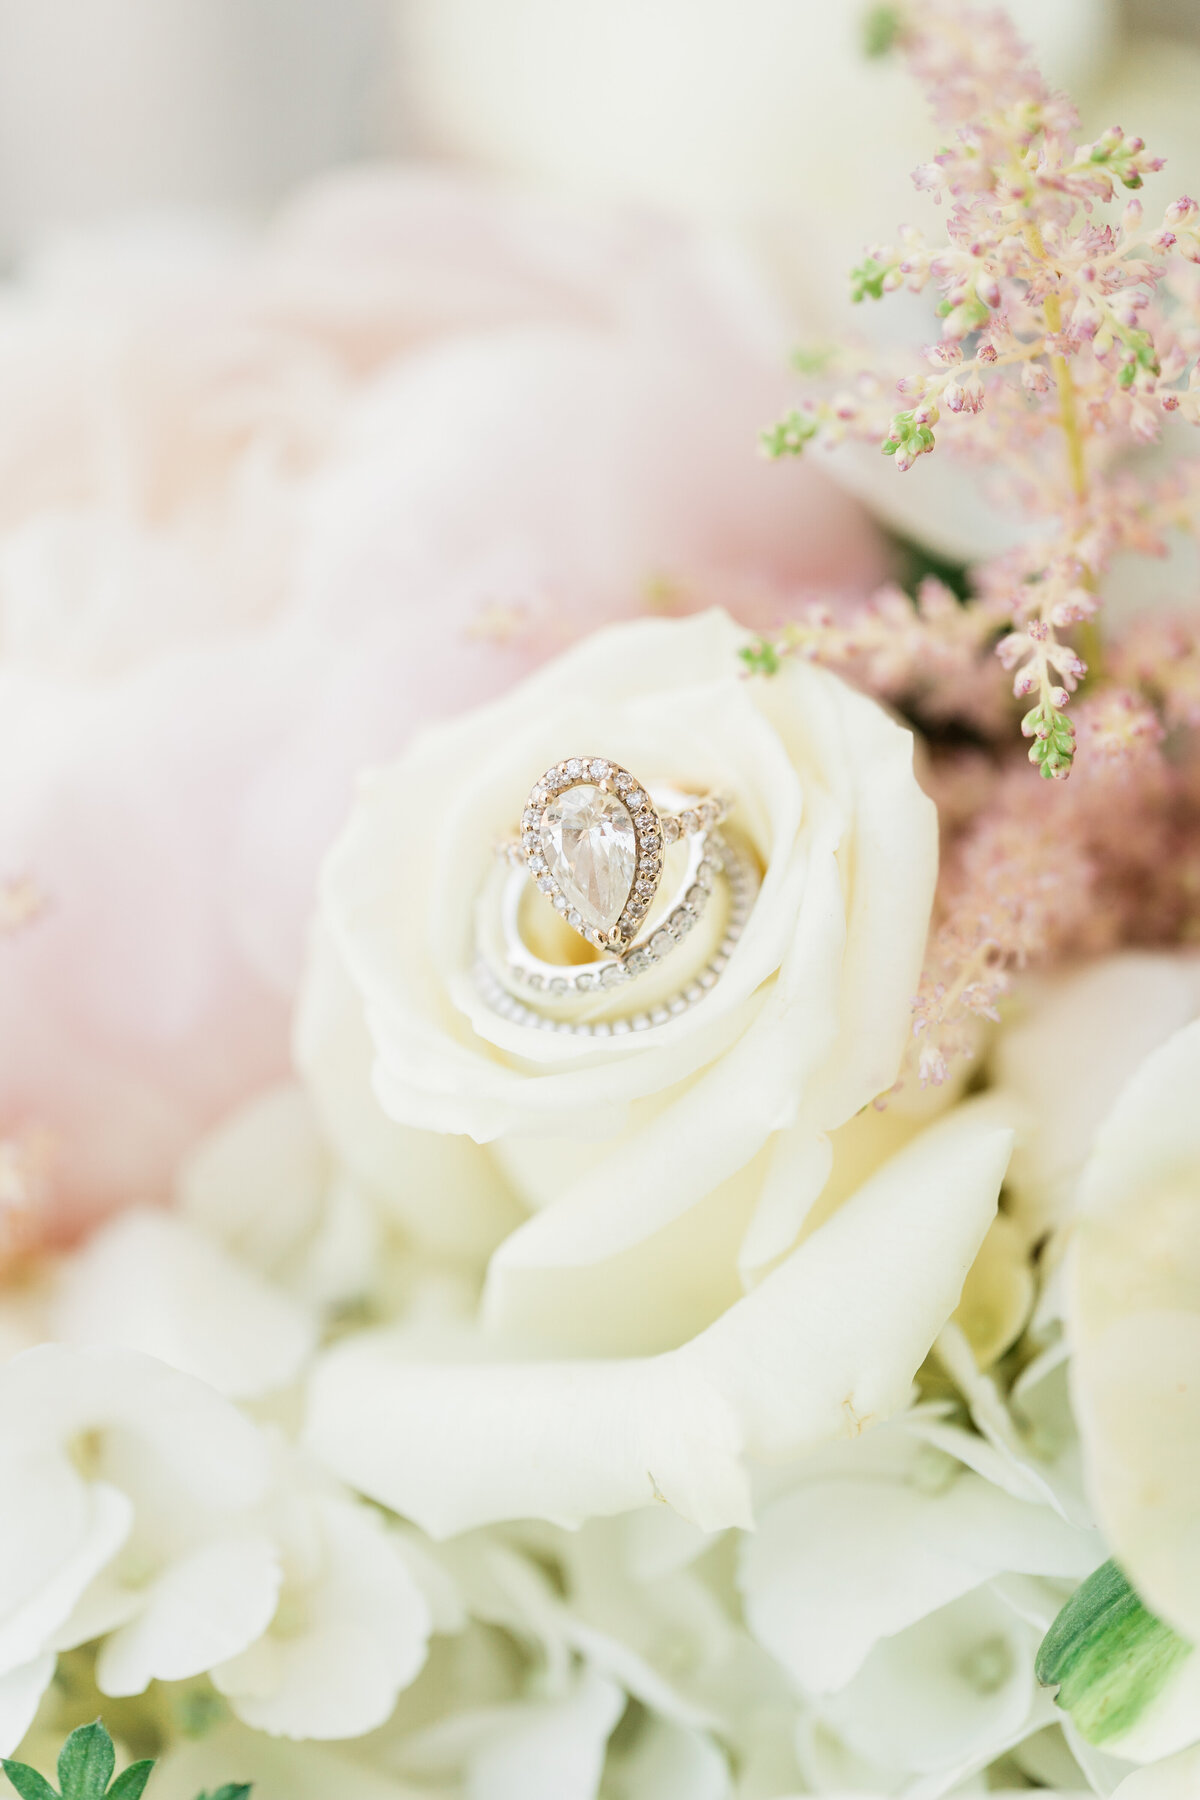 Teardrop diamond ring on a white rose